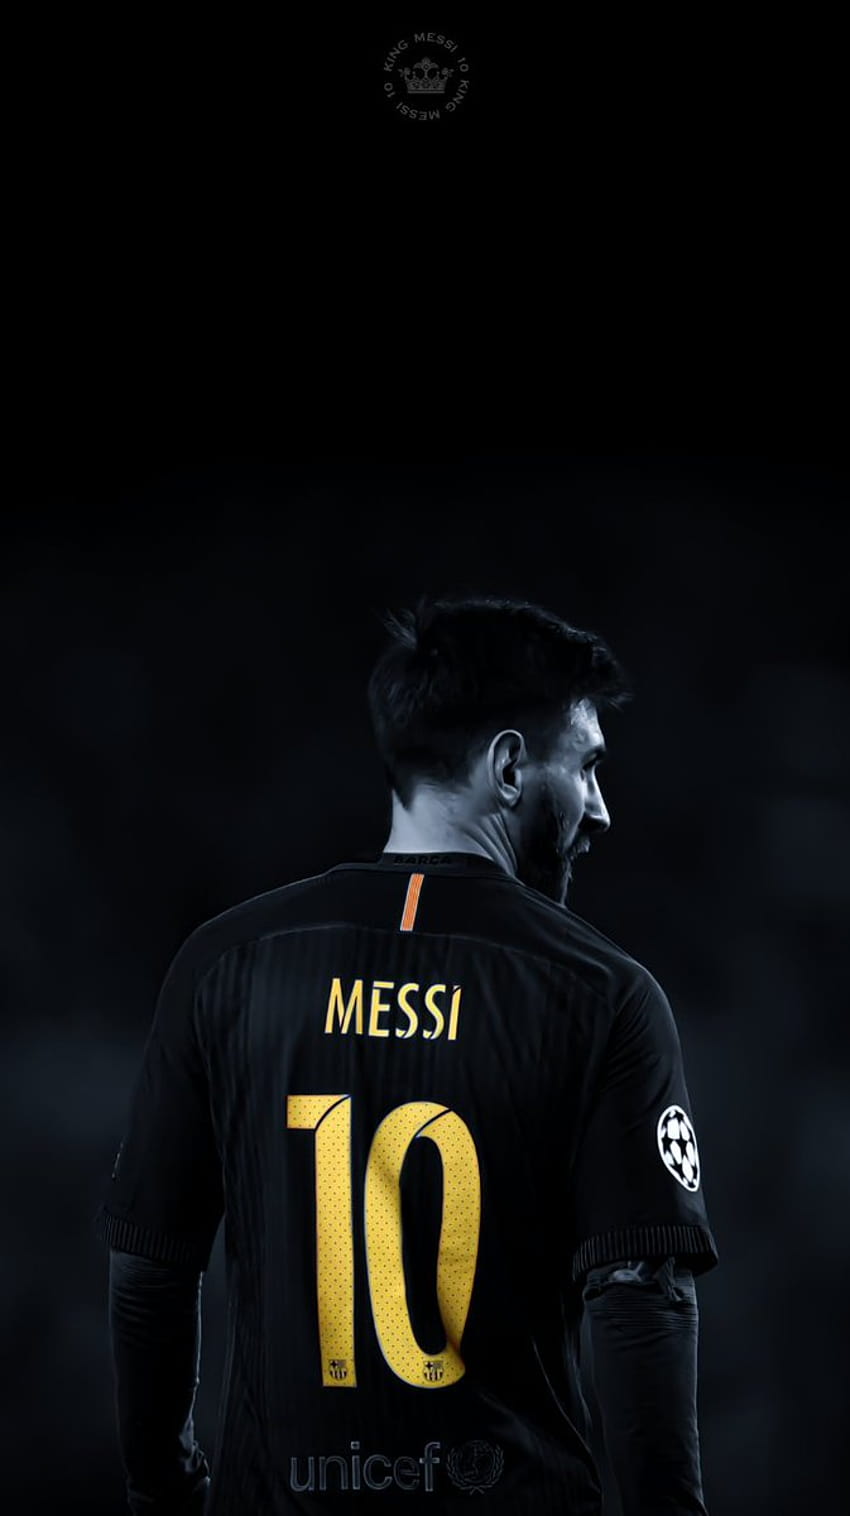 Messi preto, futebol escuro Papel de parede de celular HD